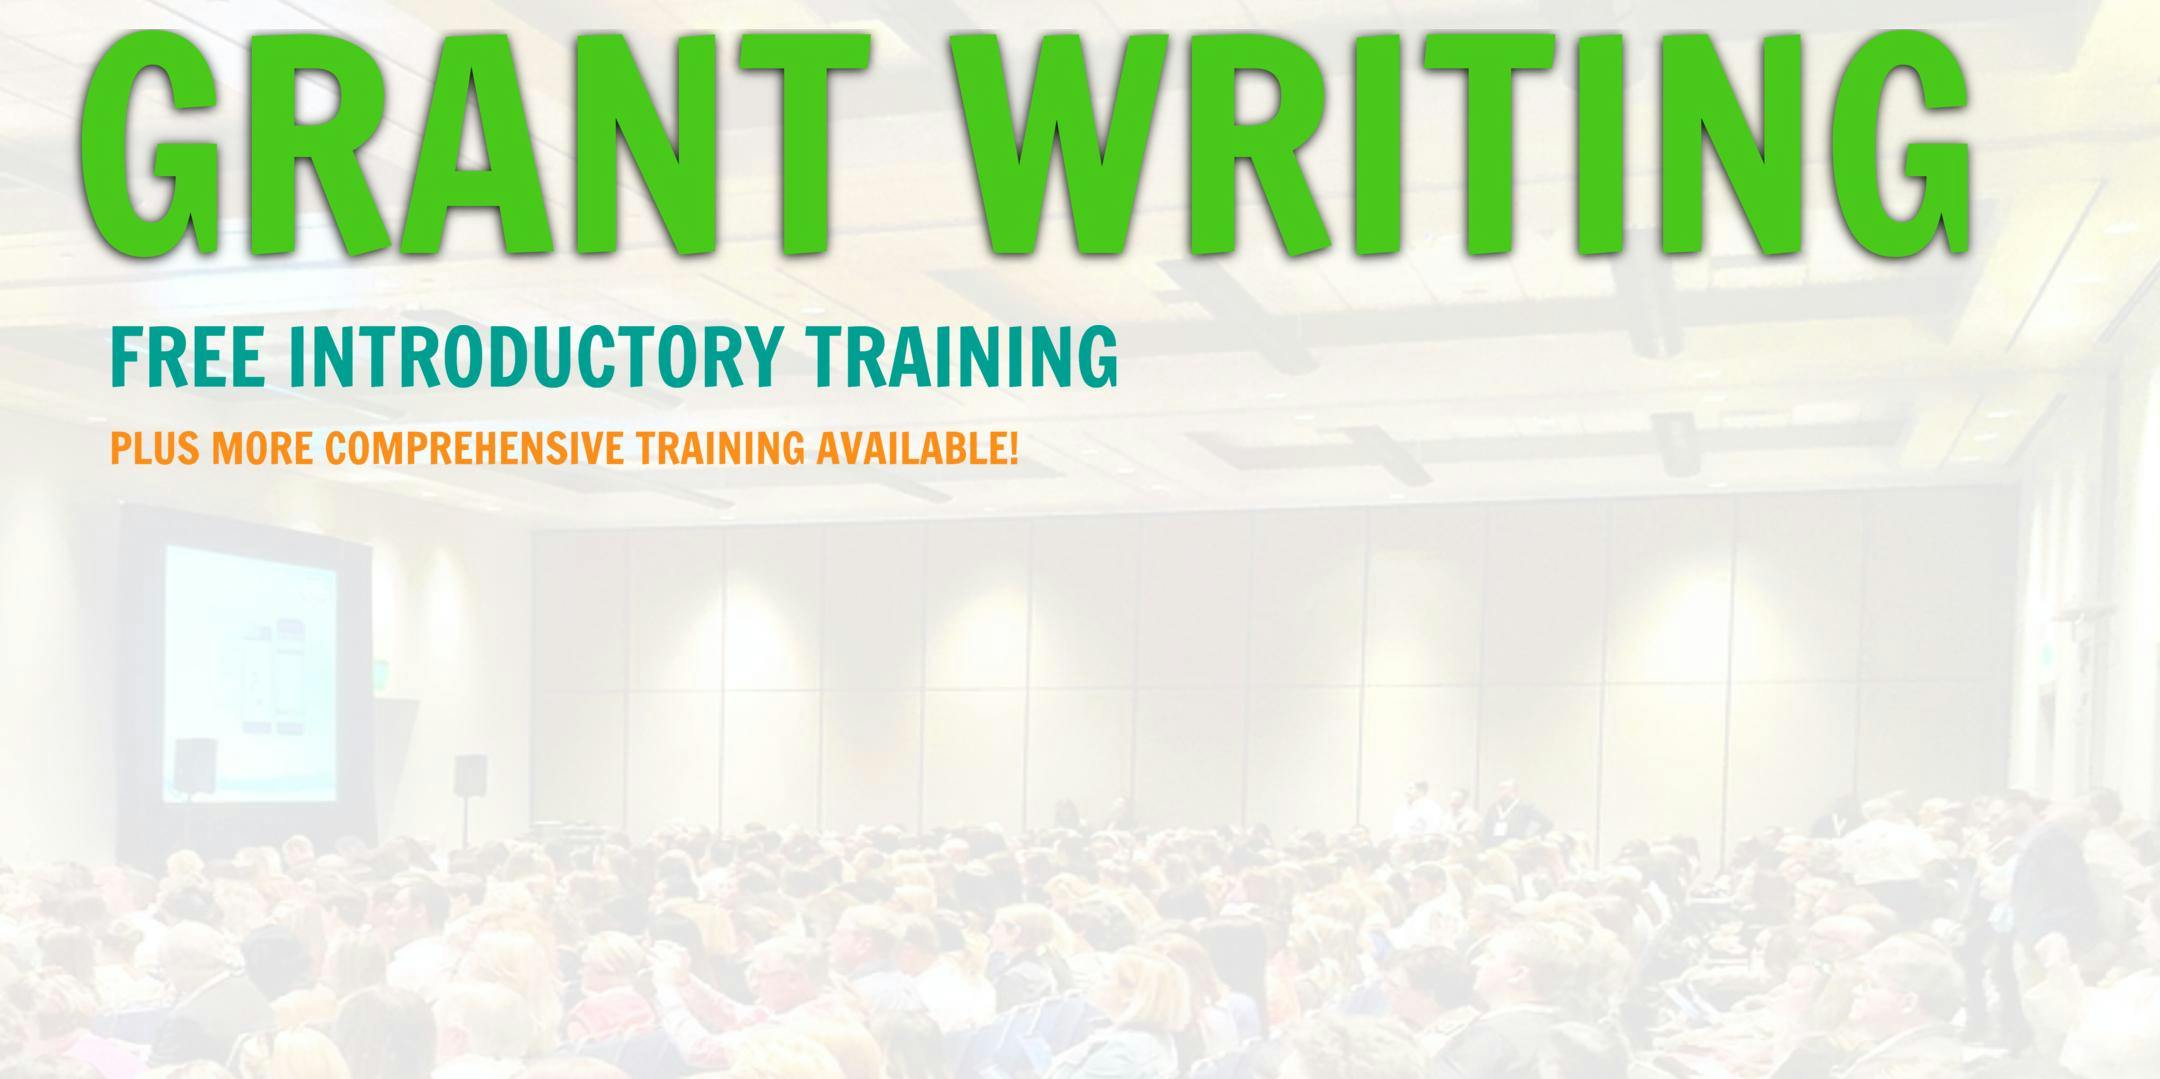 Grant Writing Introductory Training... Santa Rosa, CA 